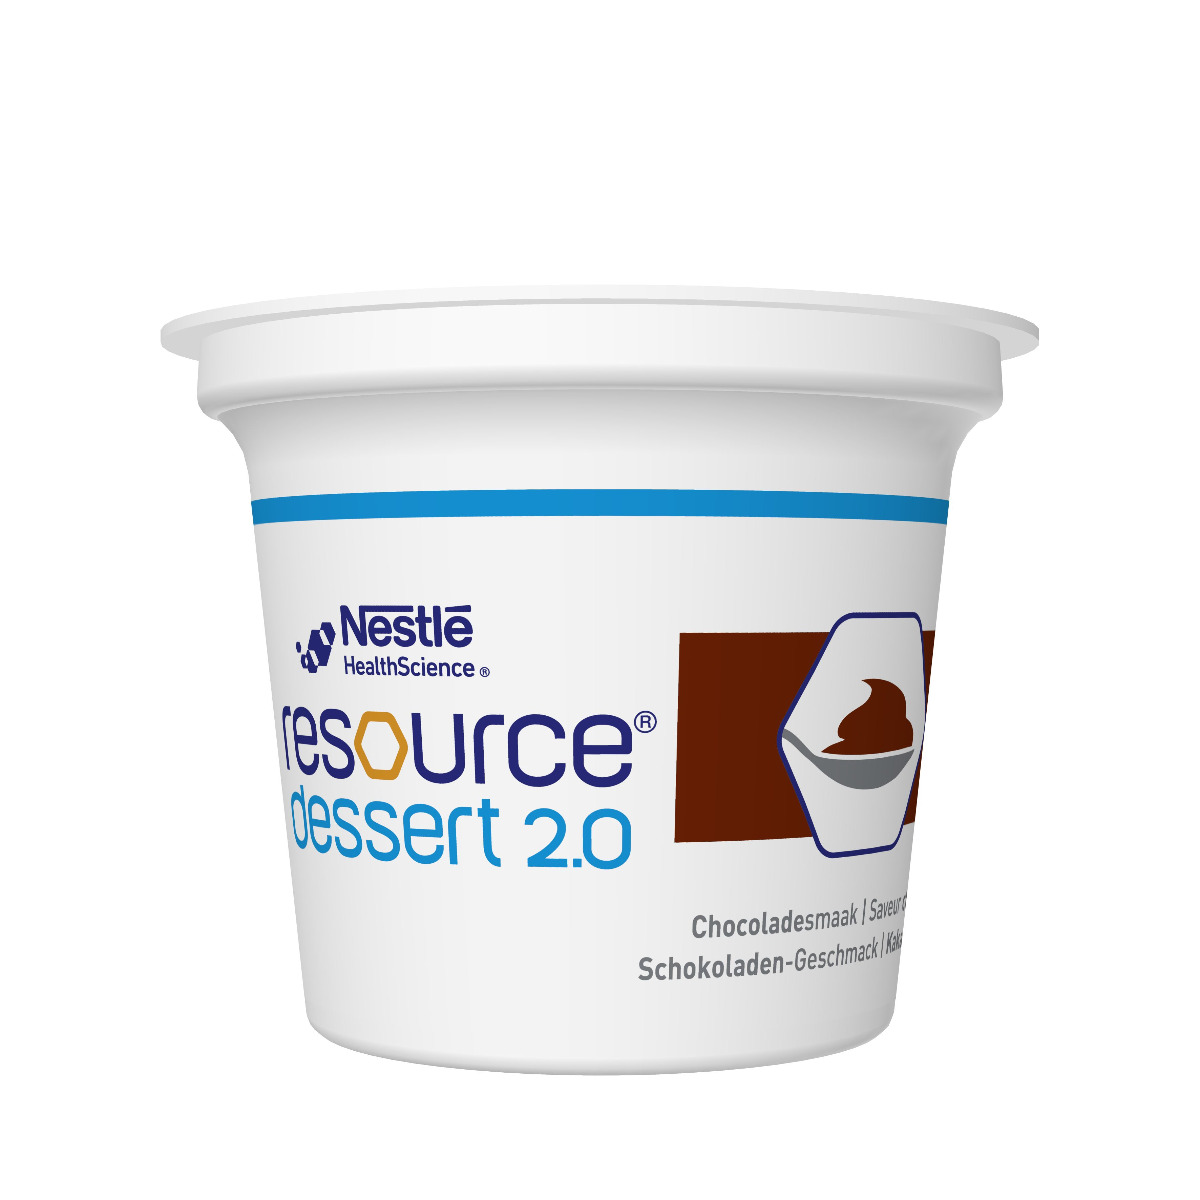 RESOURCE® Dessert 2.0 kakao 4x125 g RESOURCE®